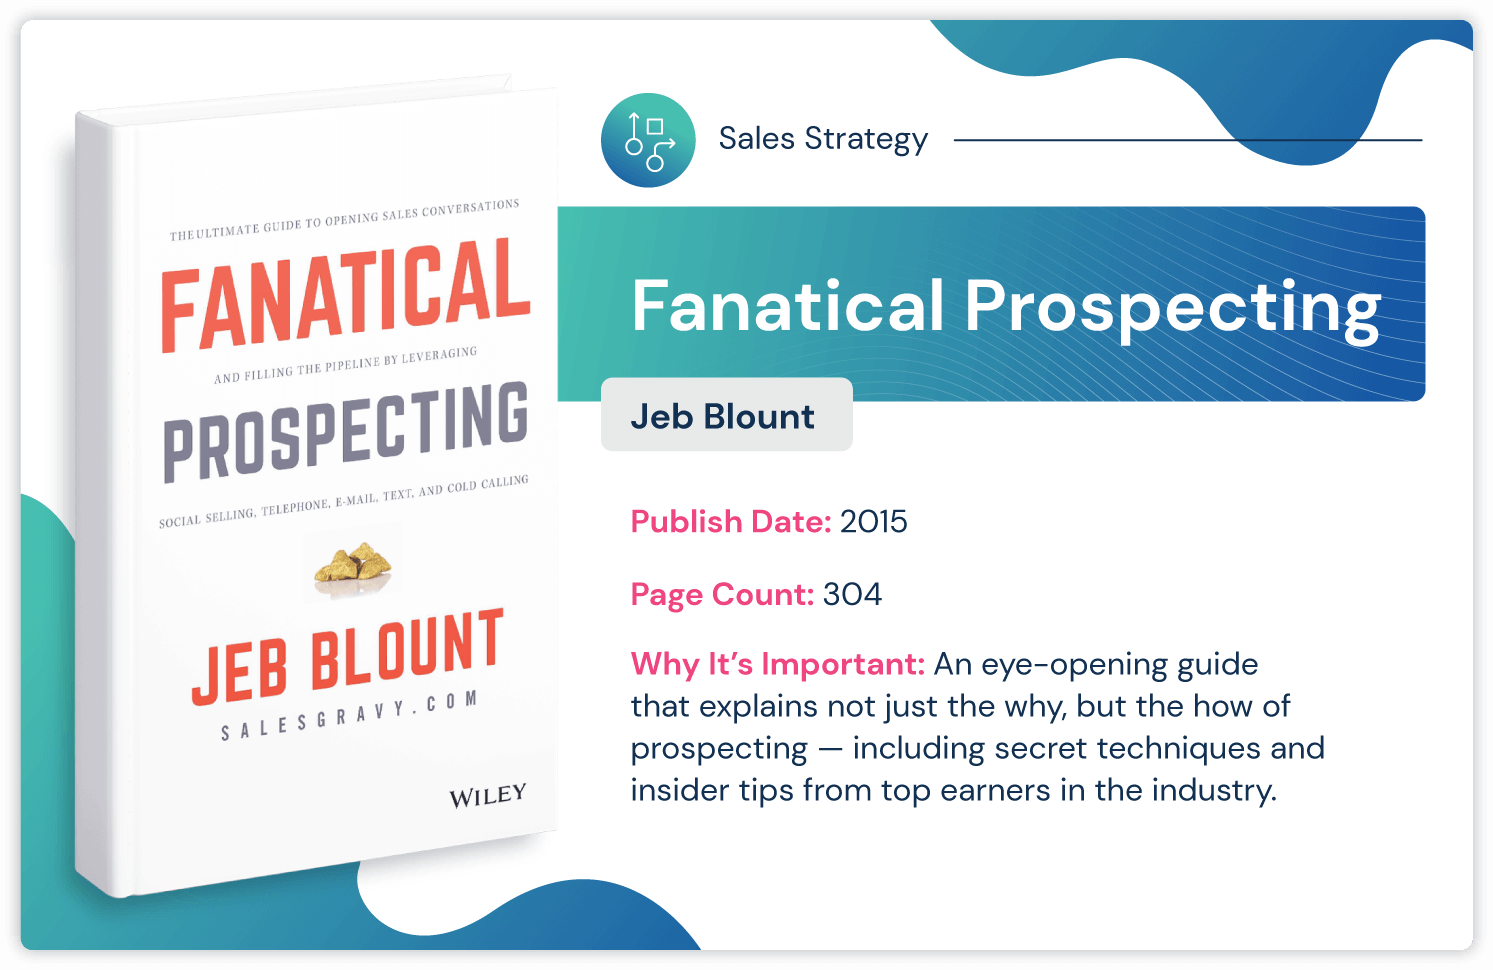 Jeb Blount 的銷售策略書籍“Fanatical Prospecting”，關於 2015 年出版的內幕勘探技巧和 304 頁